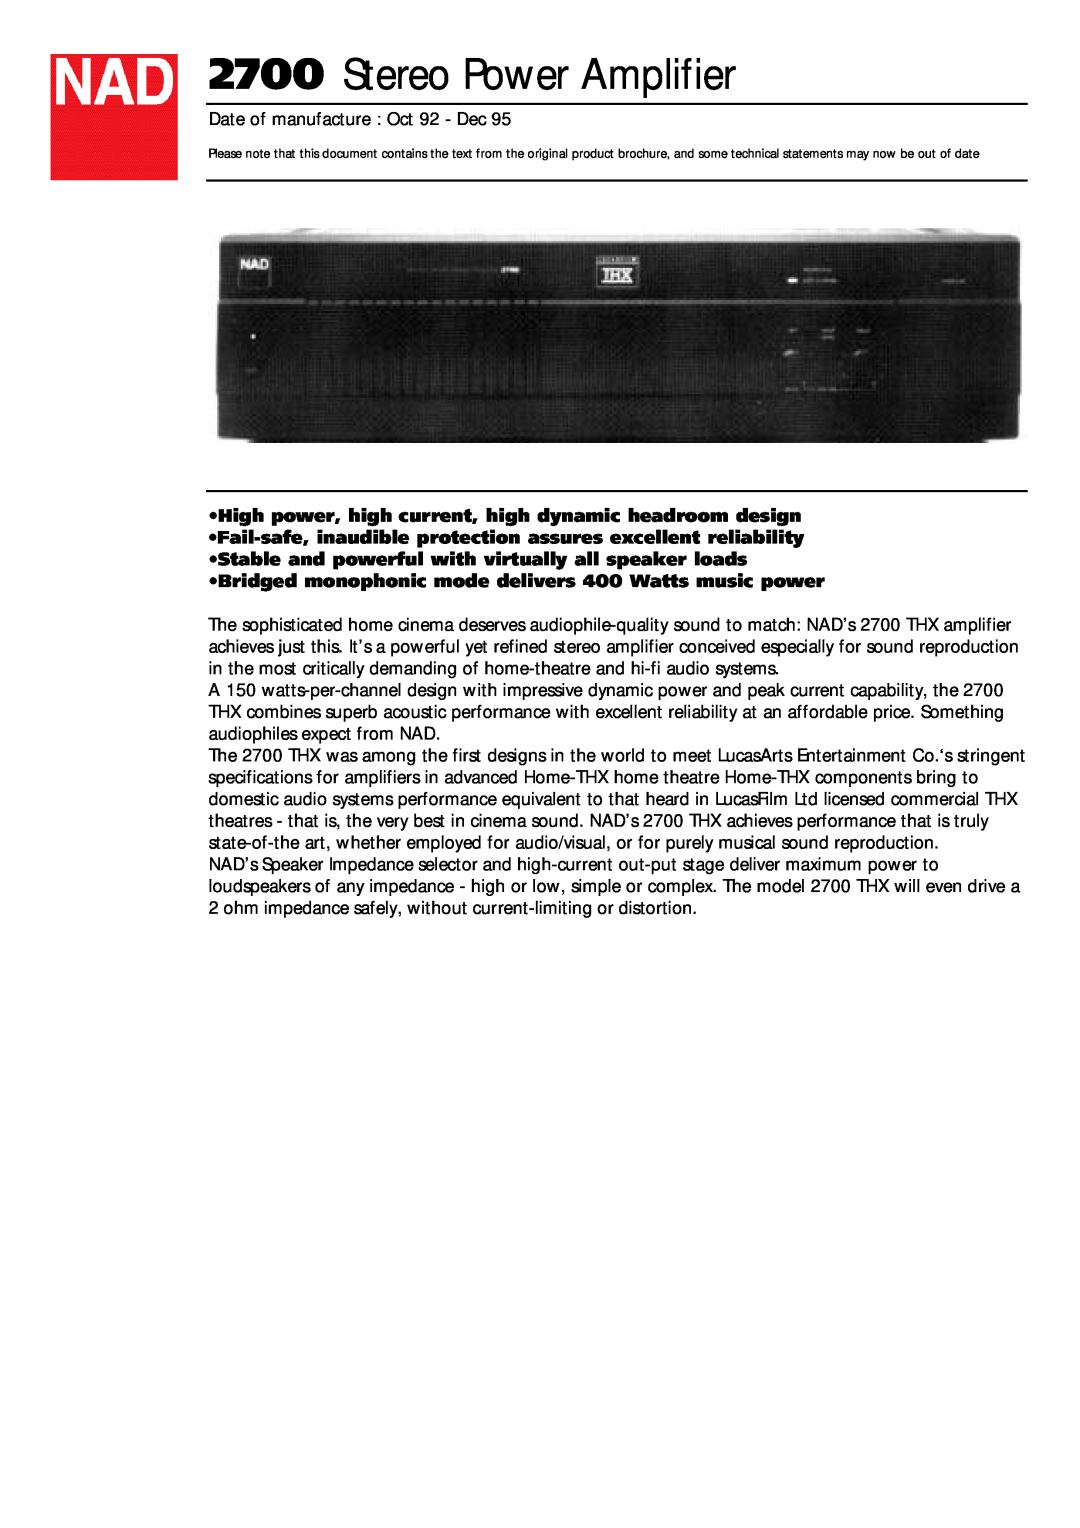 NAD 2700 brochure Stereo Power Amplifier 